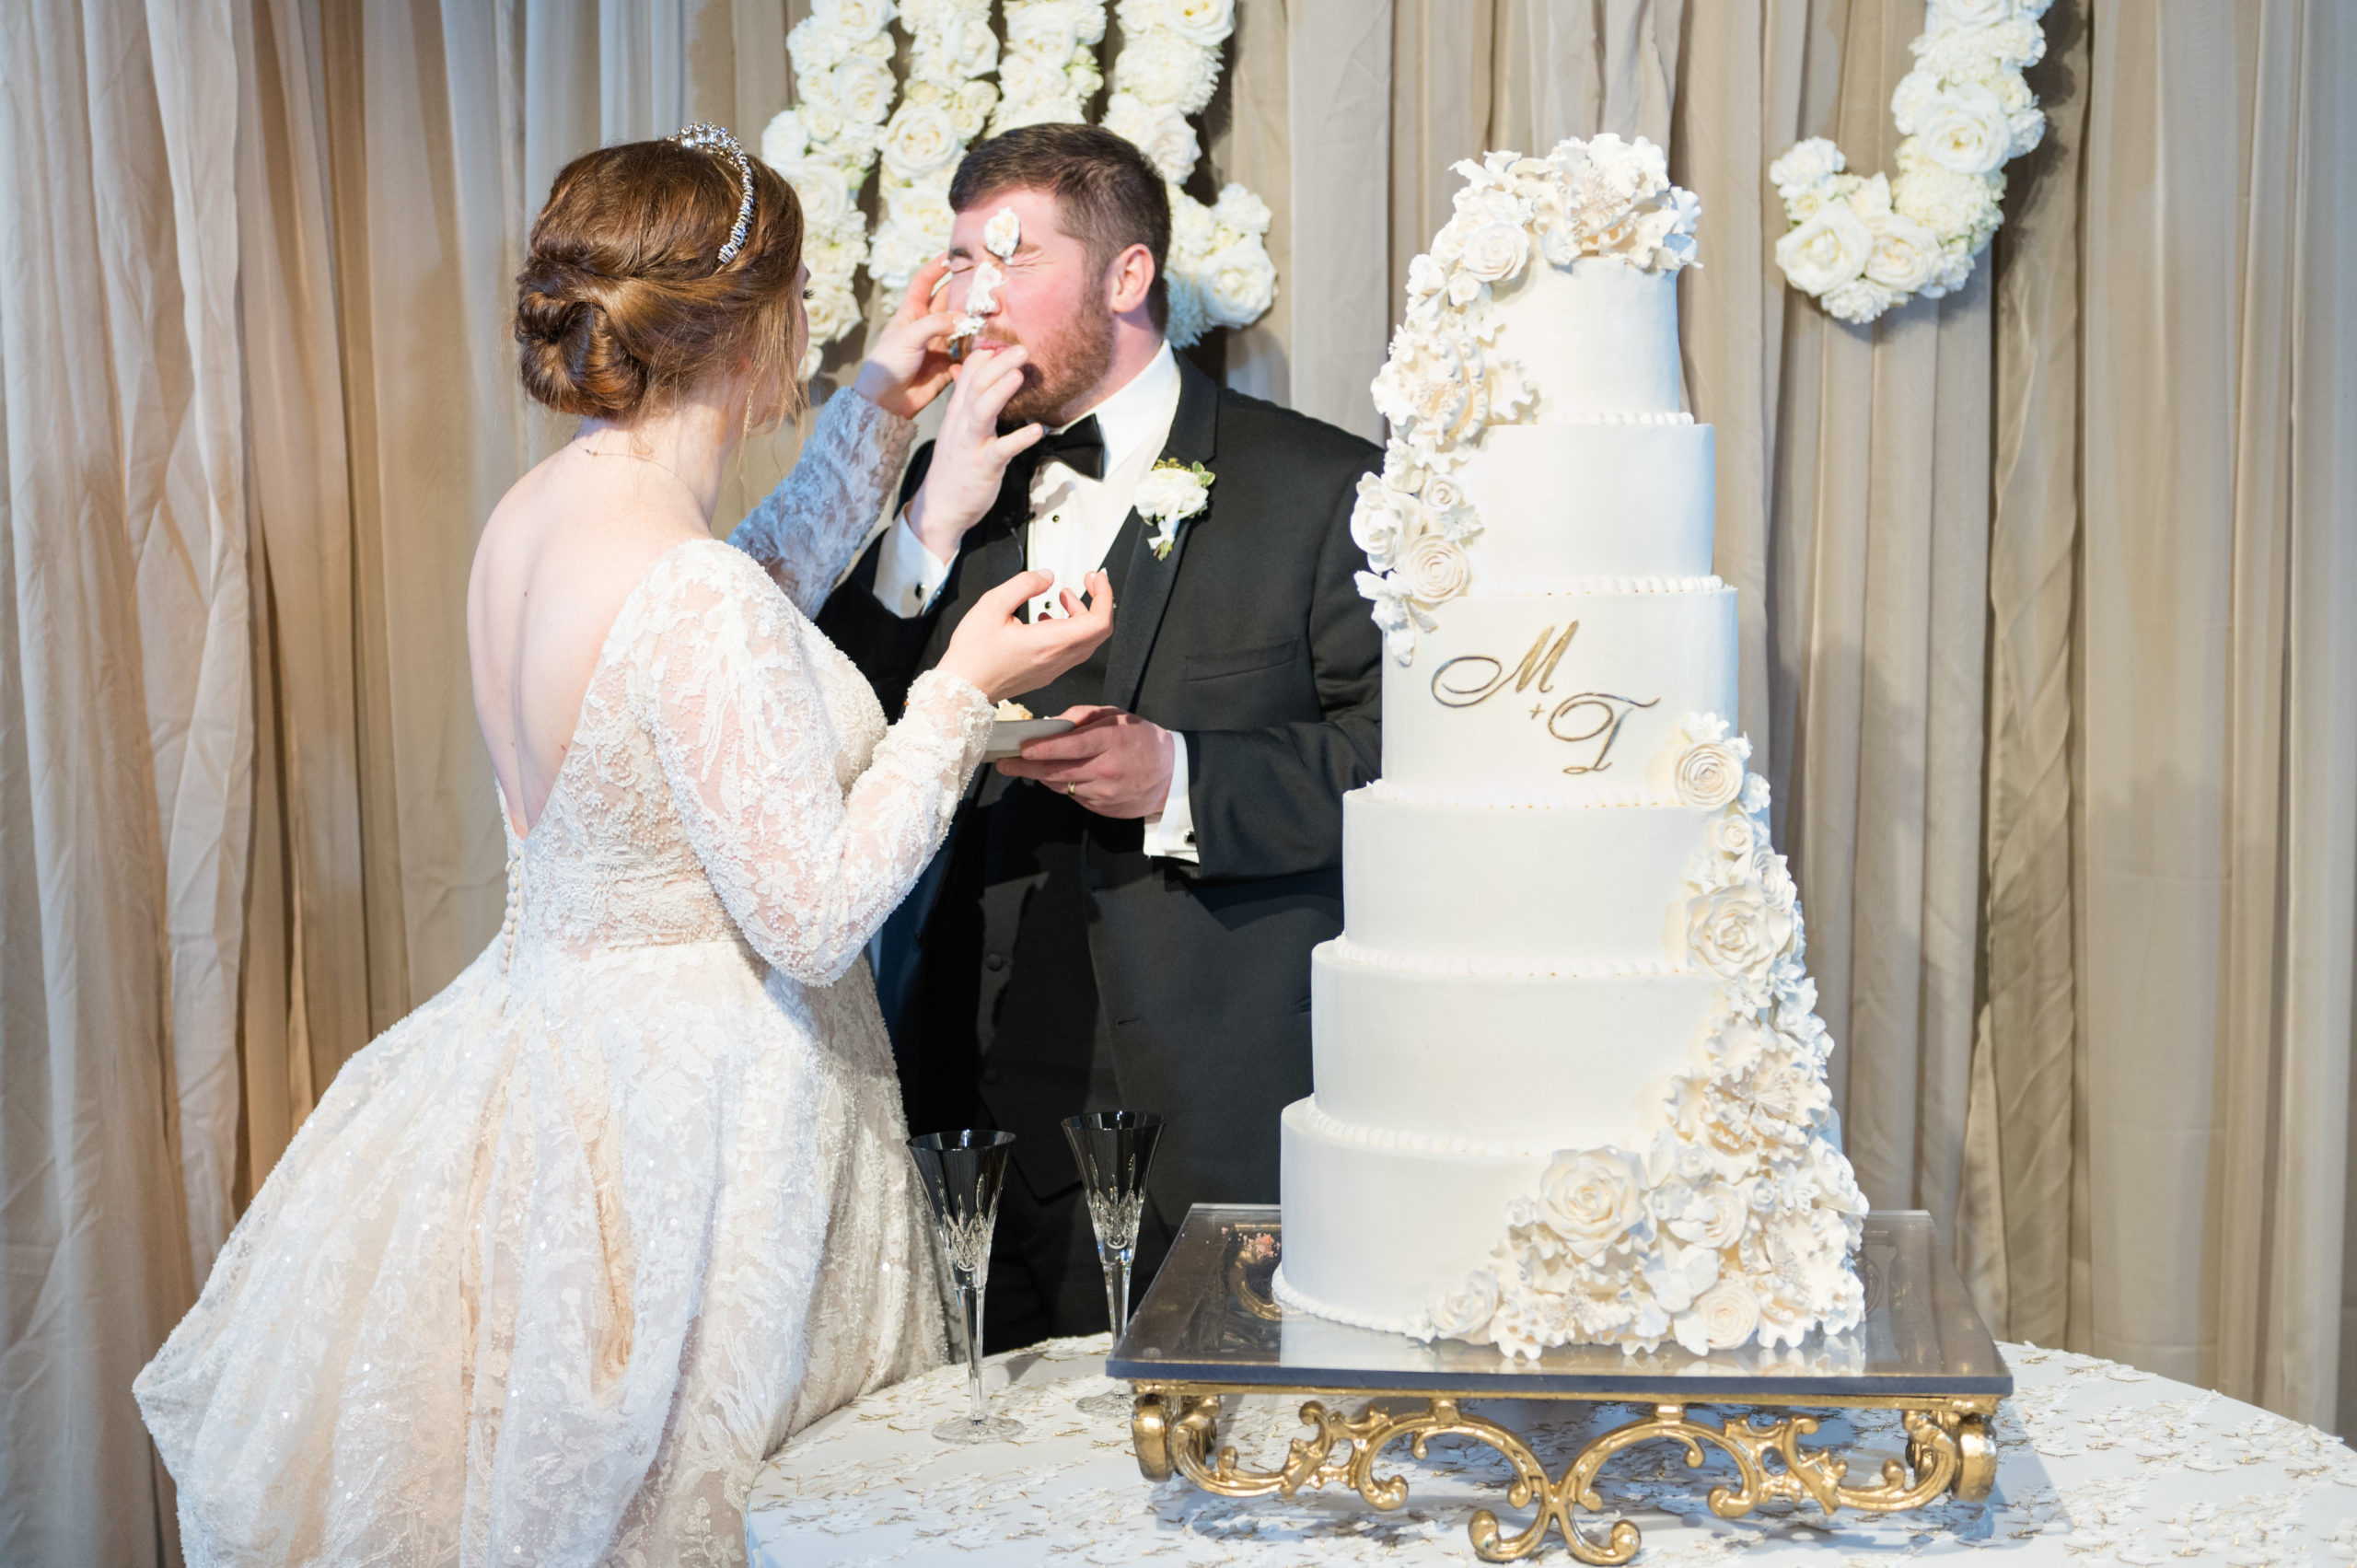 Bride smears cake on groom's face.